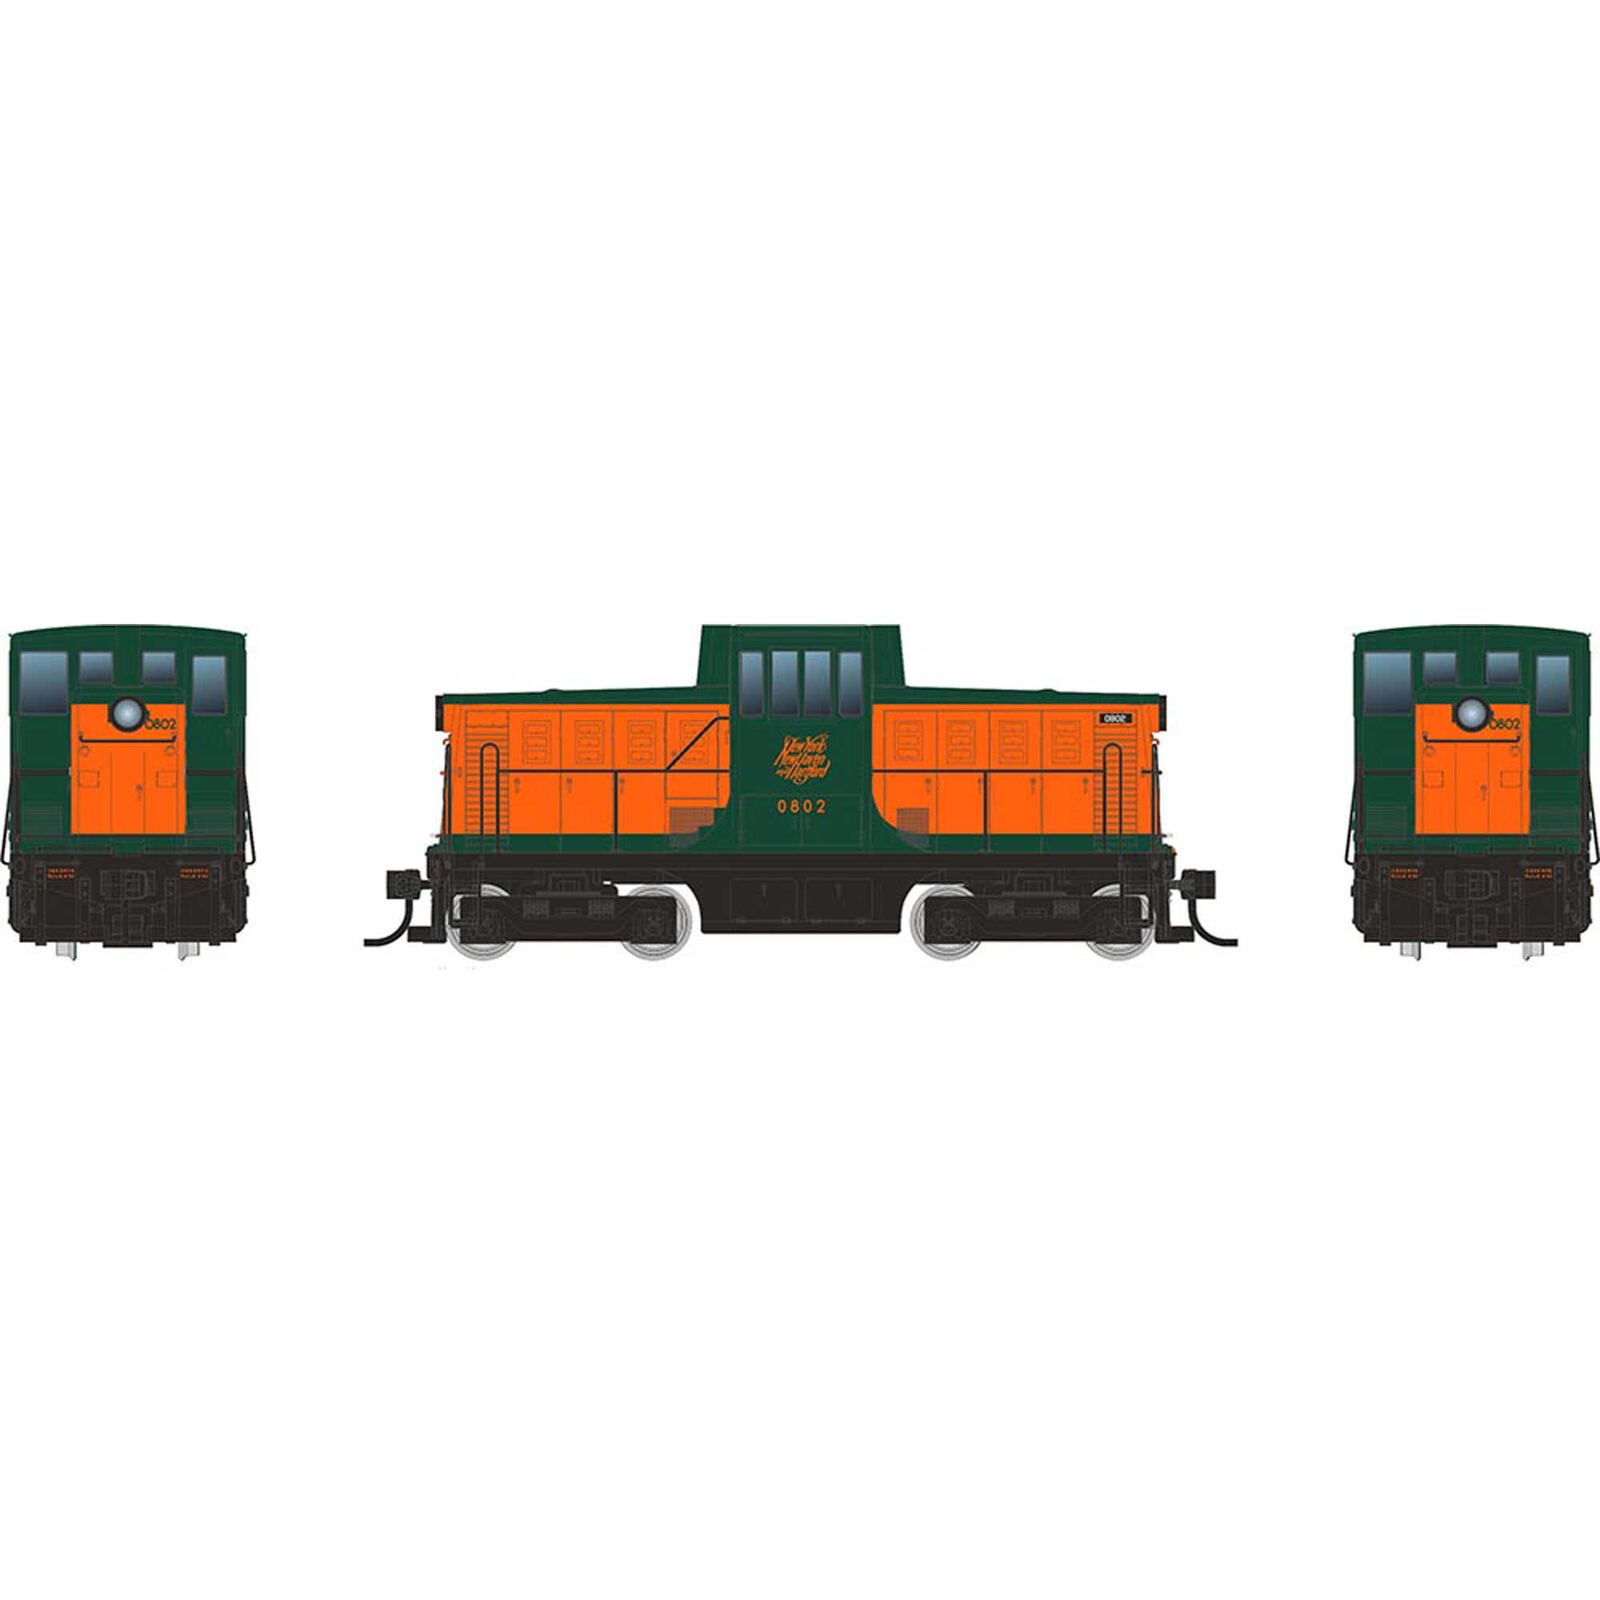 HO GE 44 Tonner Switcher Locomotive, NH Warm Orange #0804